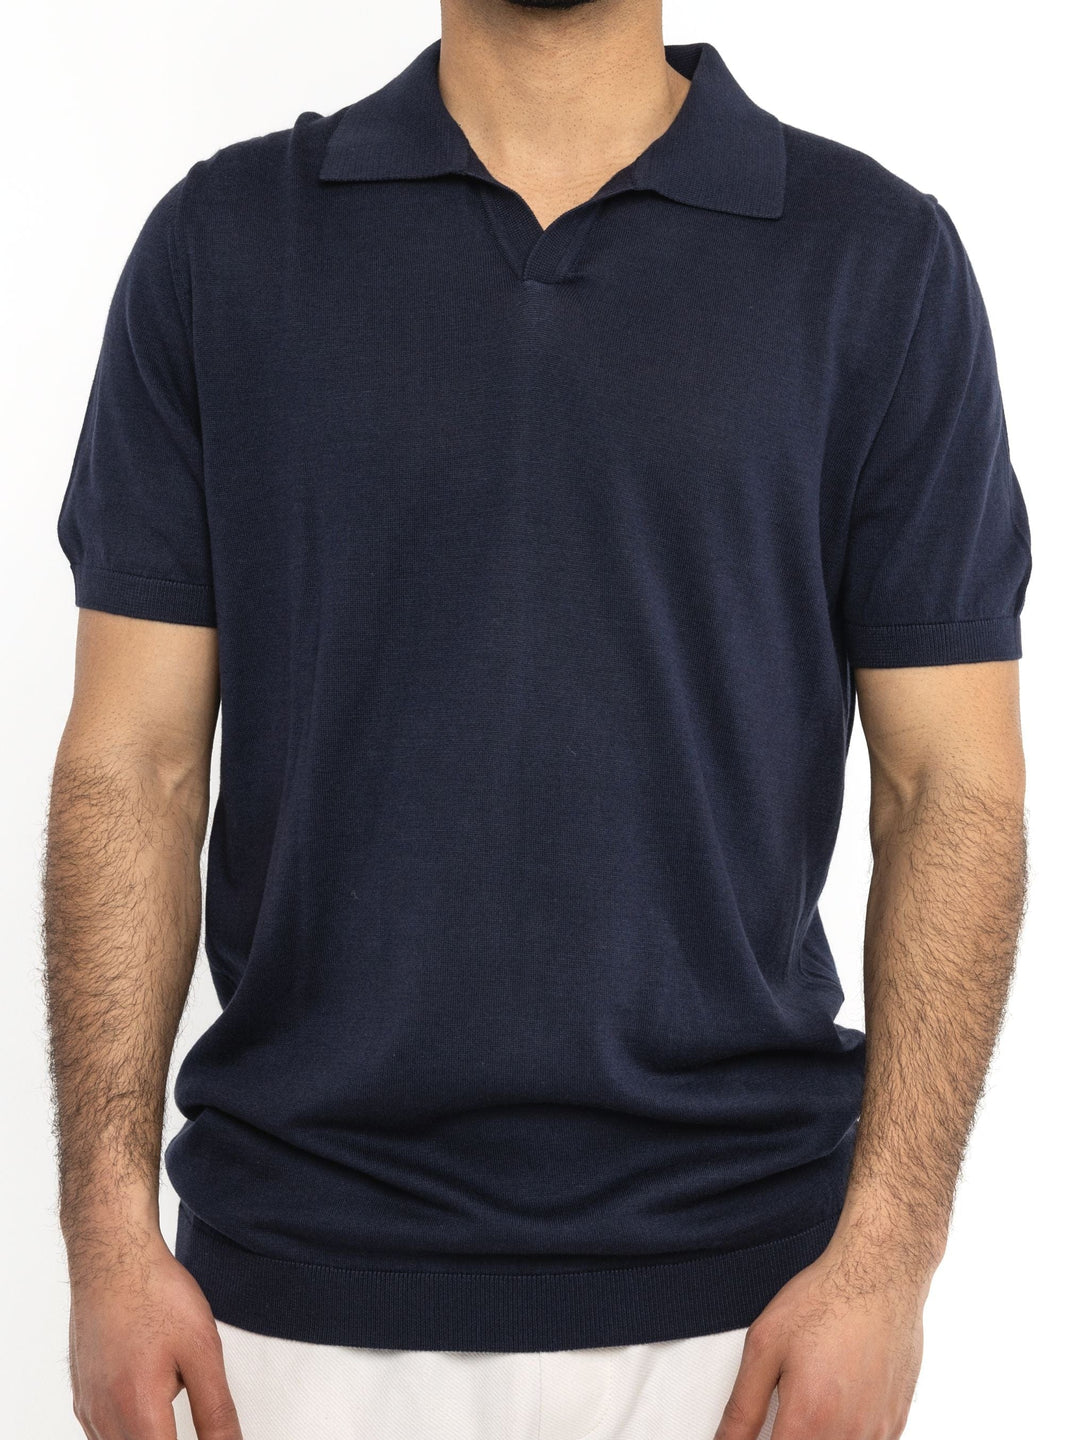 Zhivago Men Men Polo Shirt Navy Blue Knit Polo Shirt